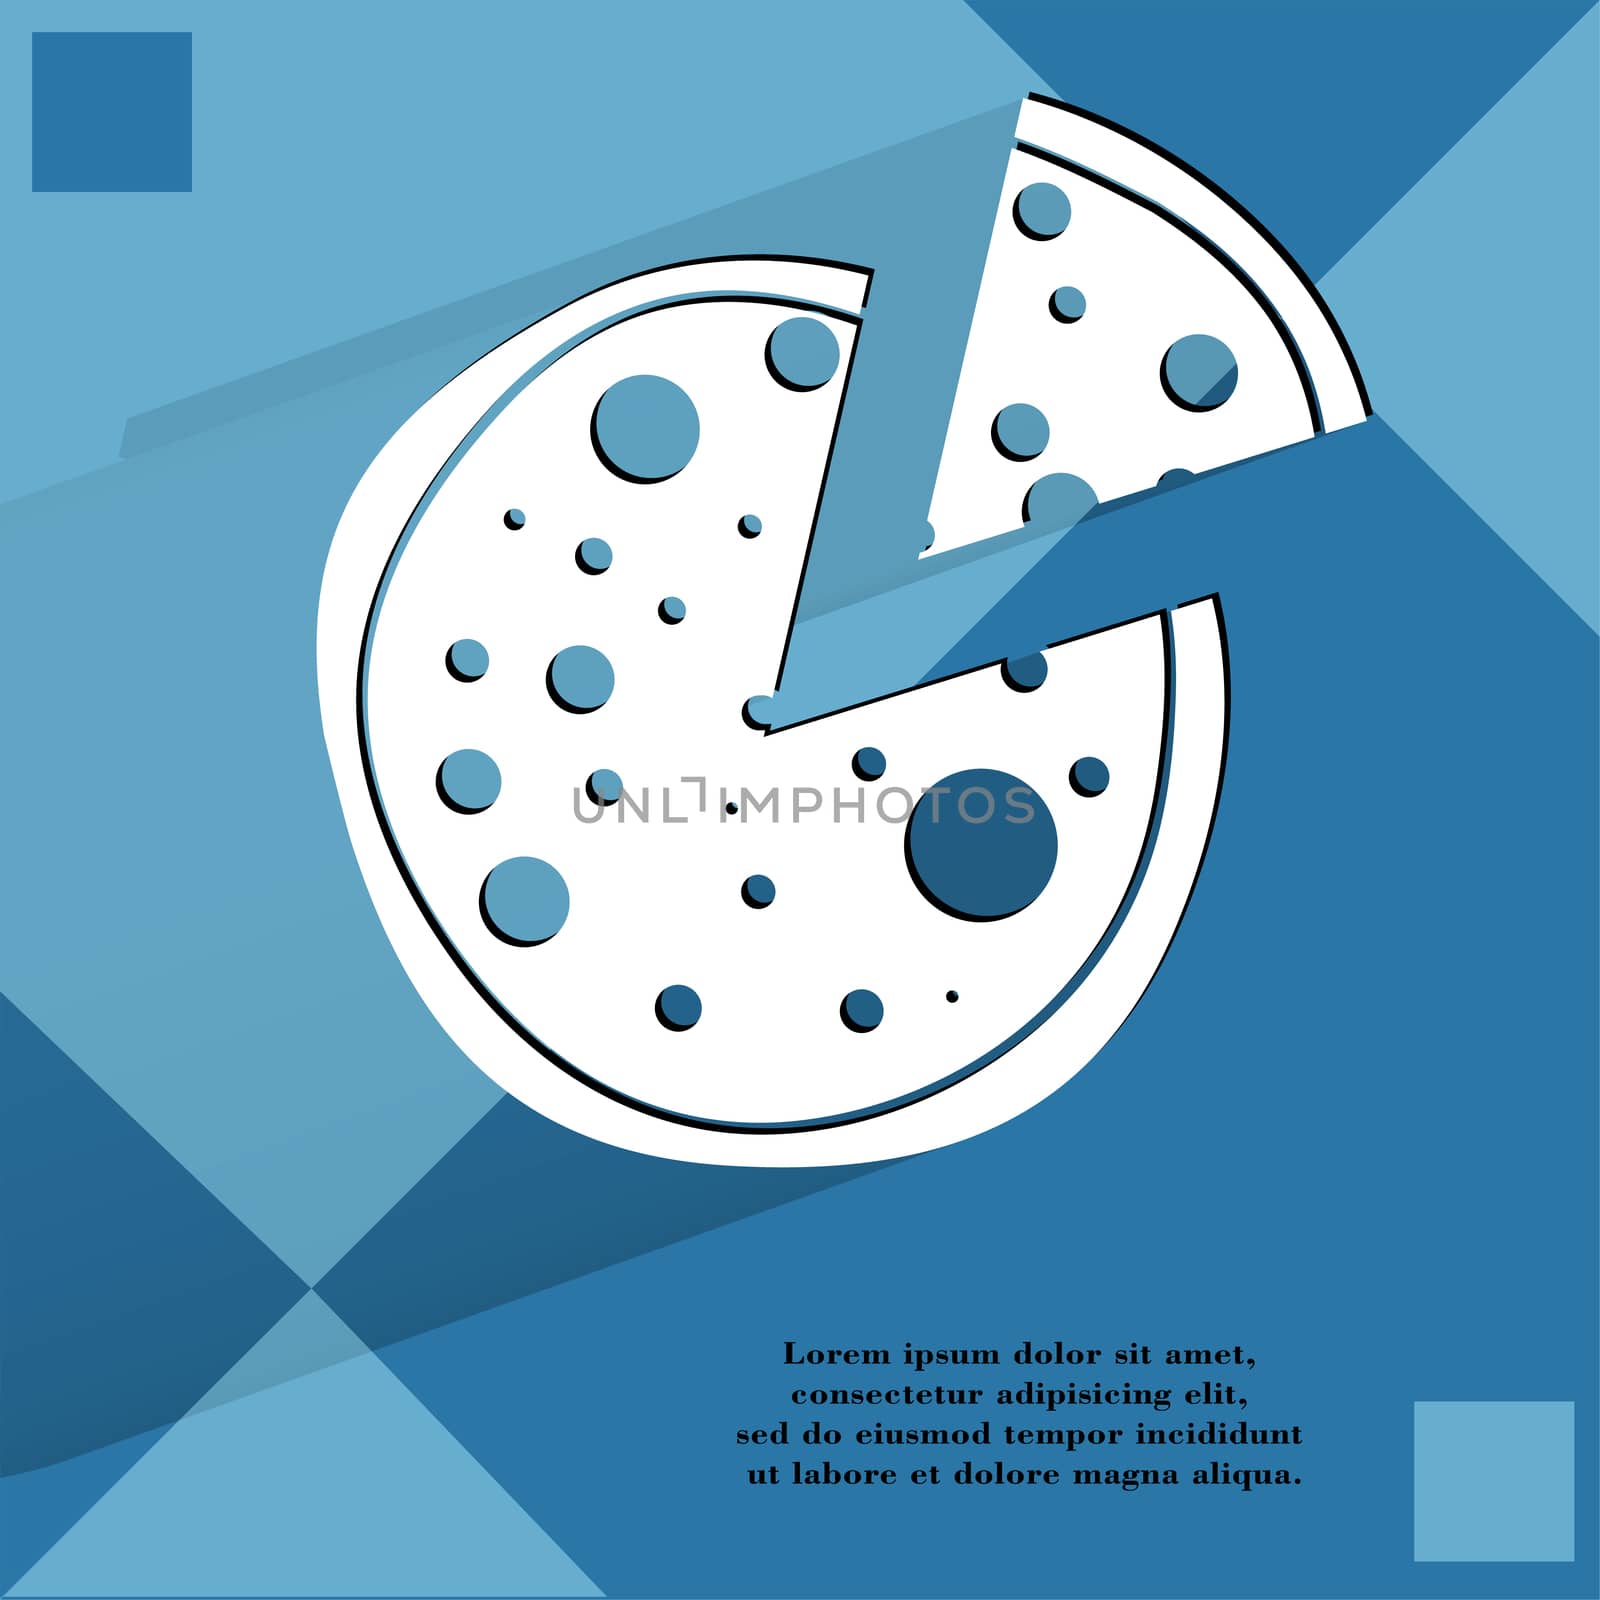 Pizza. Flat modern web button on a flat geometric abstract background  by serhii_lohvyniuk